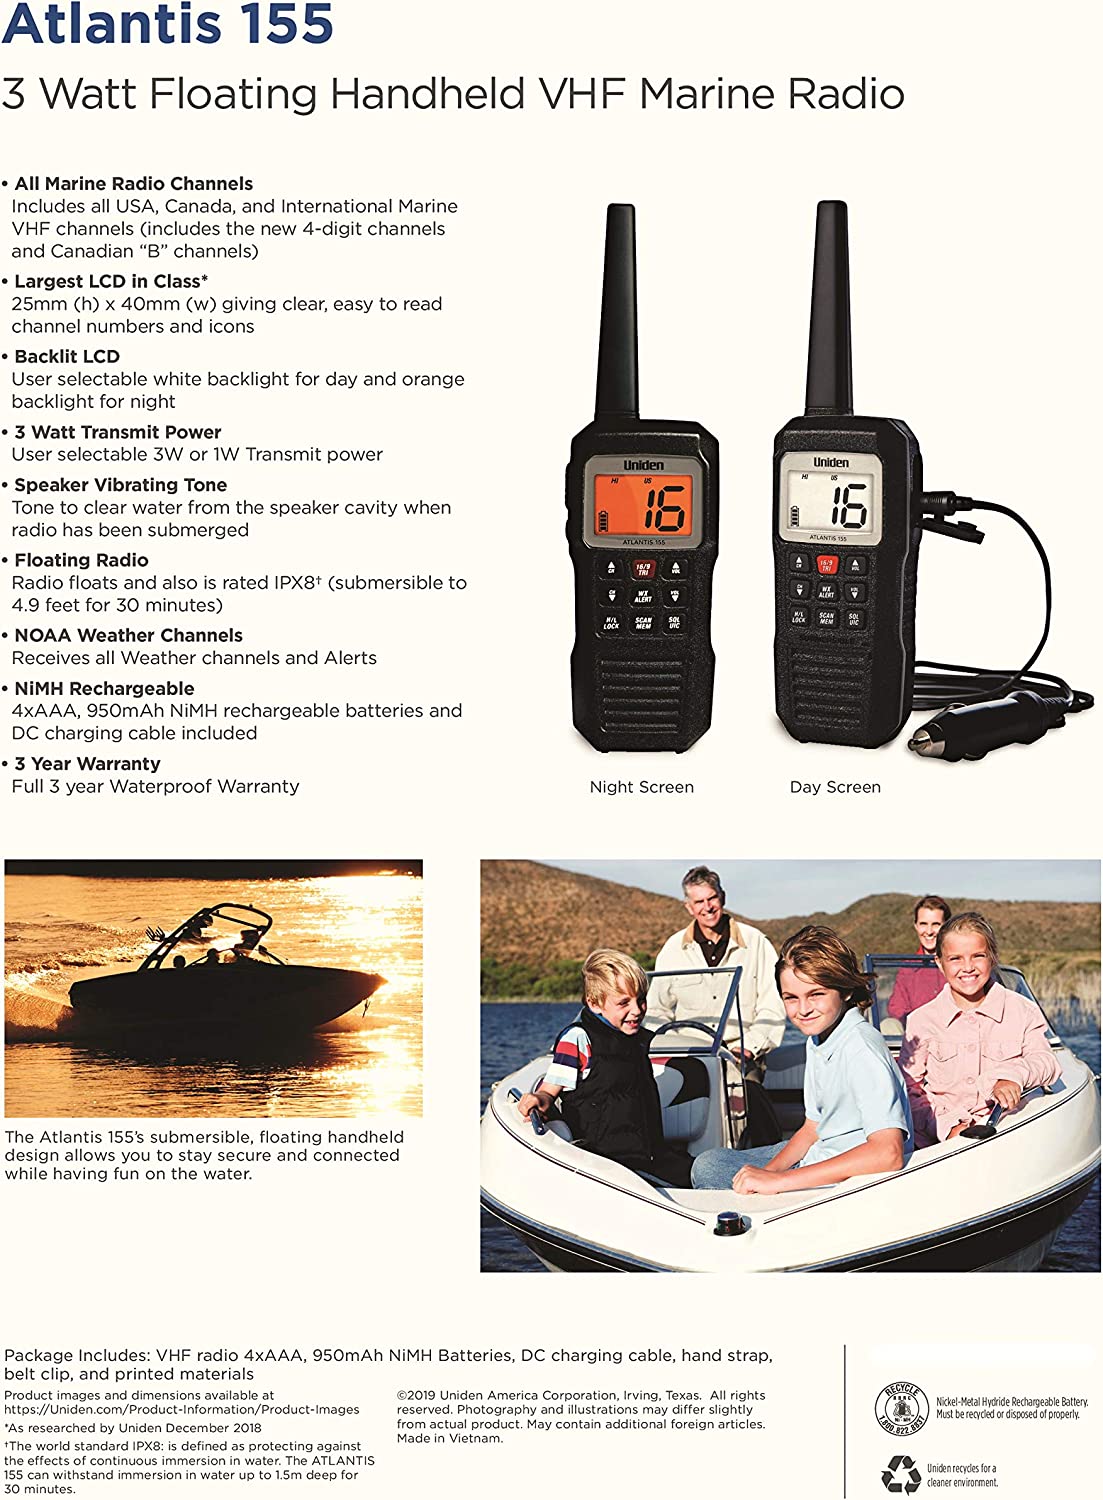 Uniden Atlantis 155 Handheld Two-Way VHF Marine Radio, Floating IPX7 Submersible Waterproof, Marine Channels, NOAA Weather Alert, 10 Hour Battery